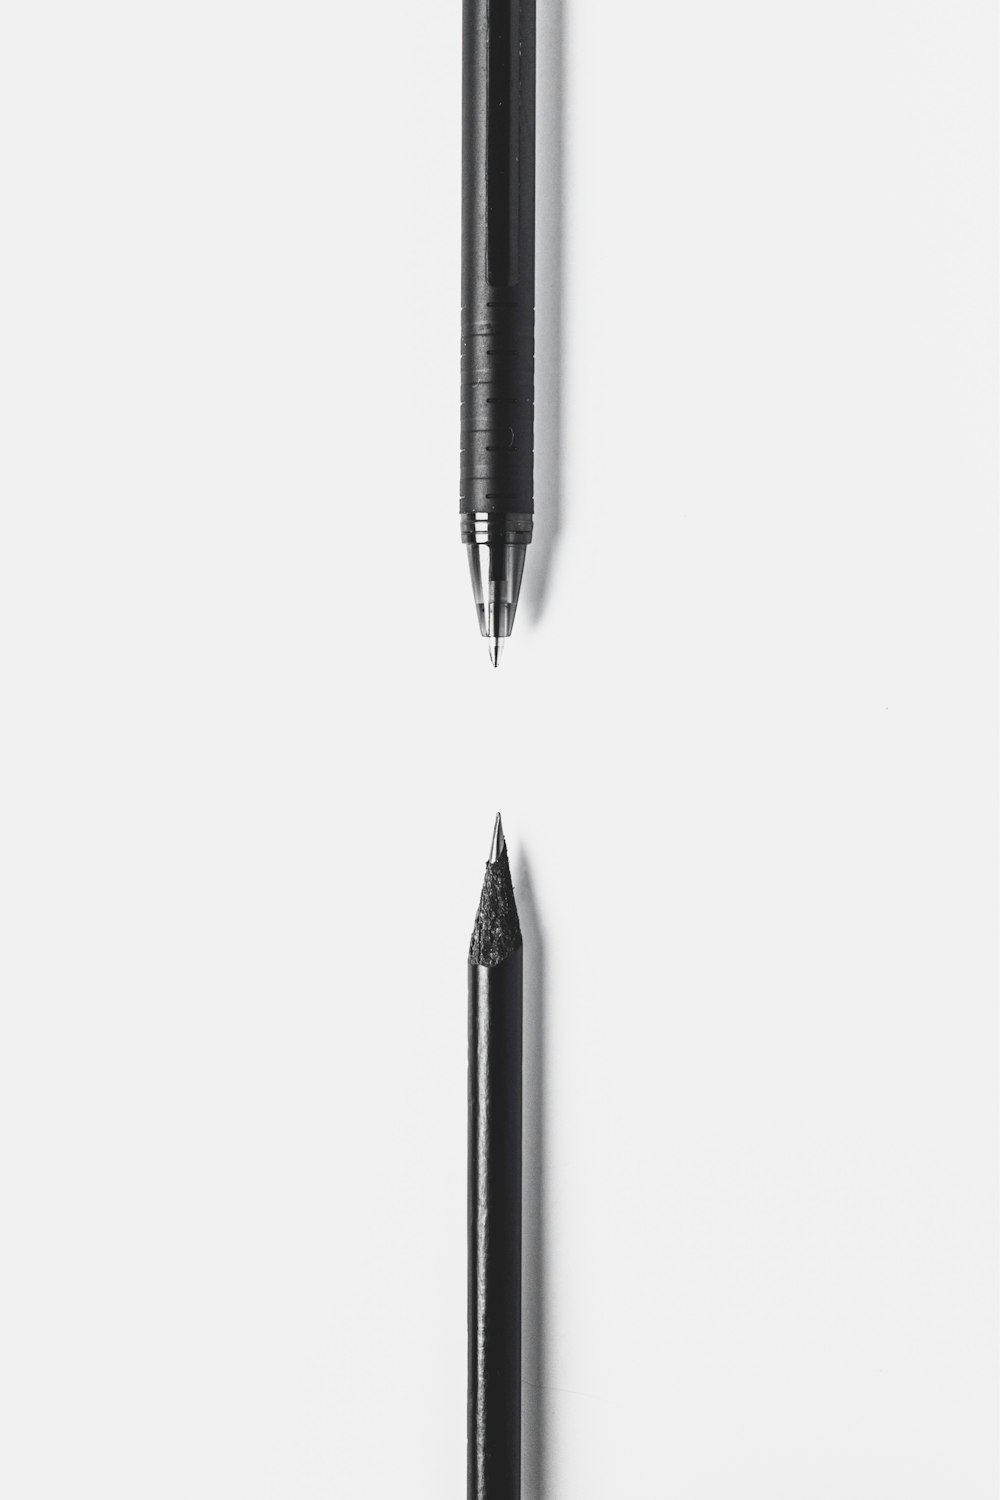 penna nera su superficie bianca